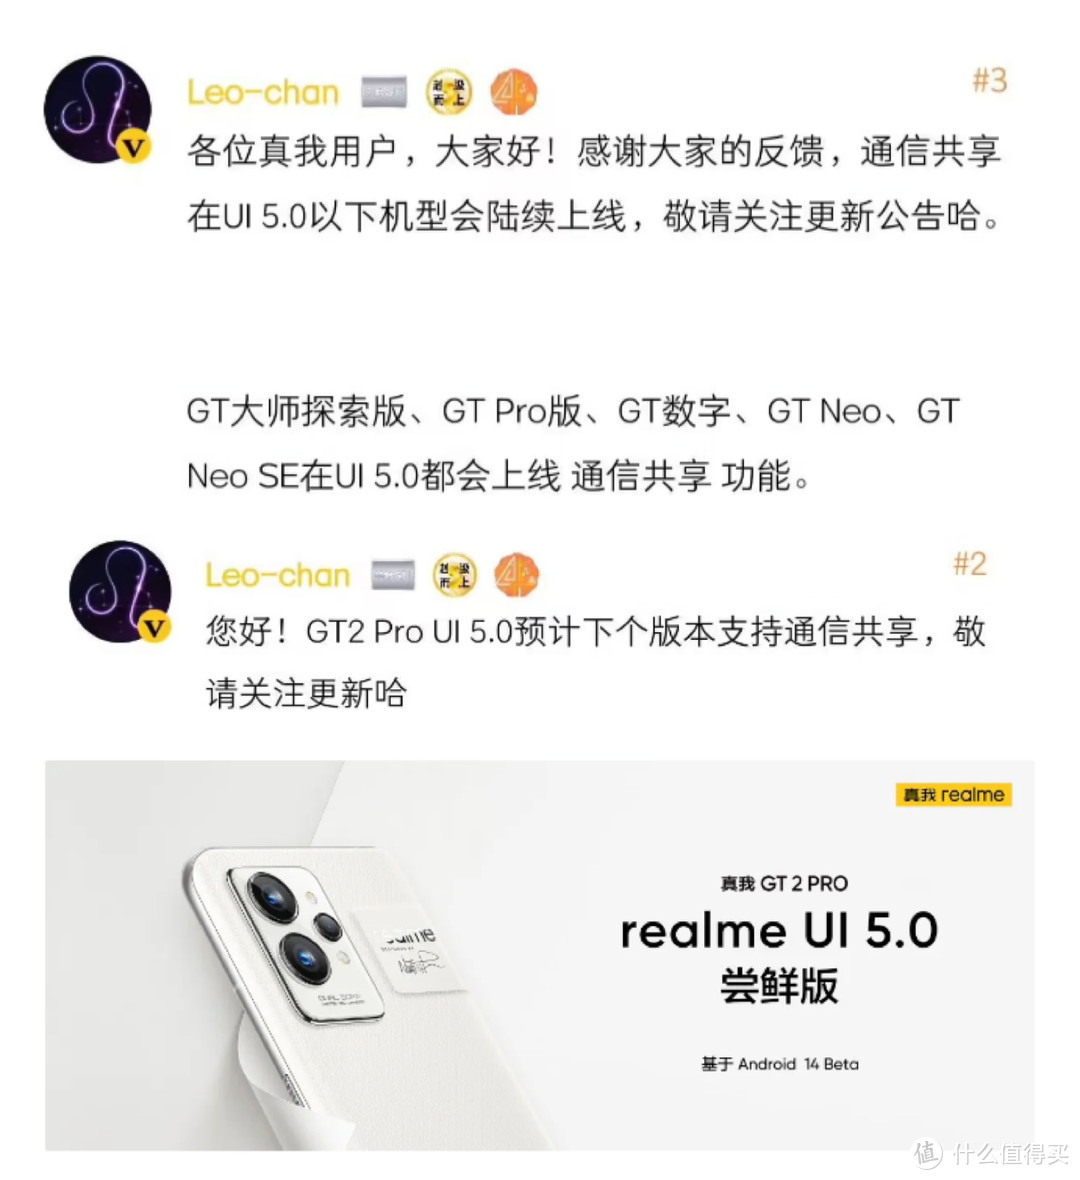 realme UI 5.0 将为多款真我手机适配“通信共享”功能